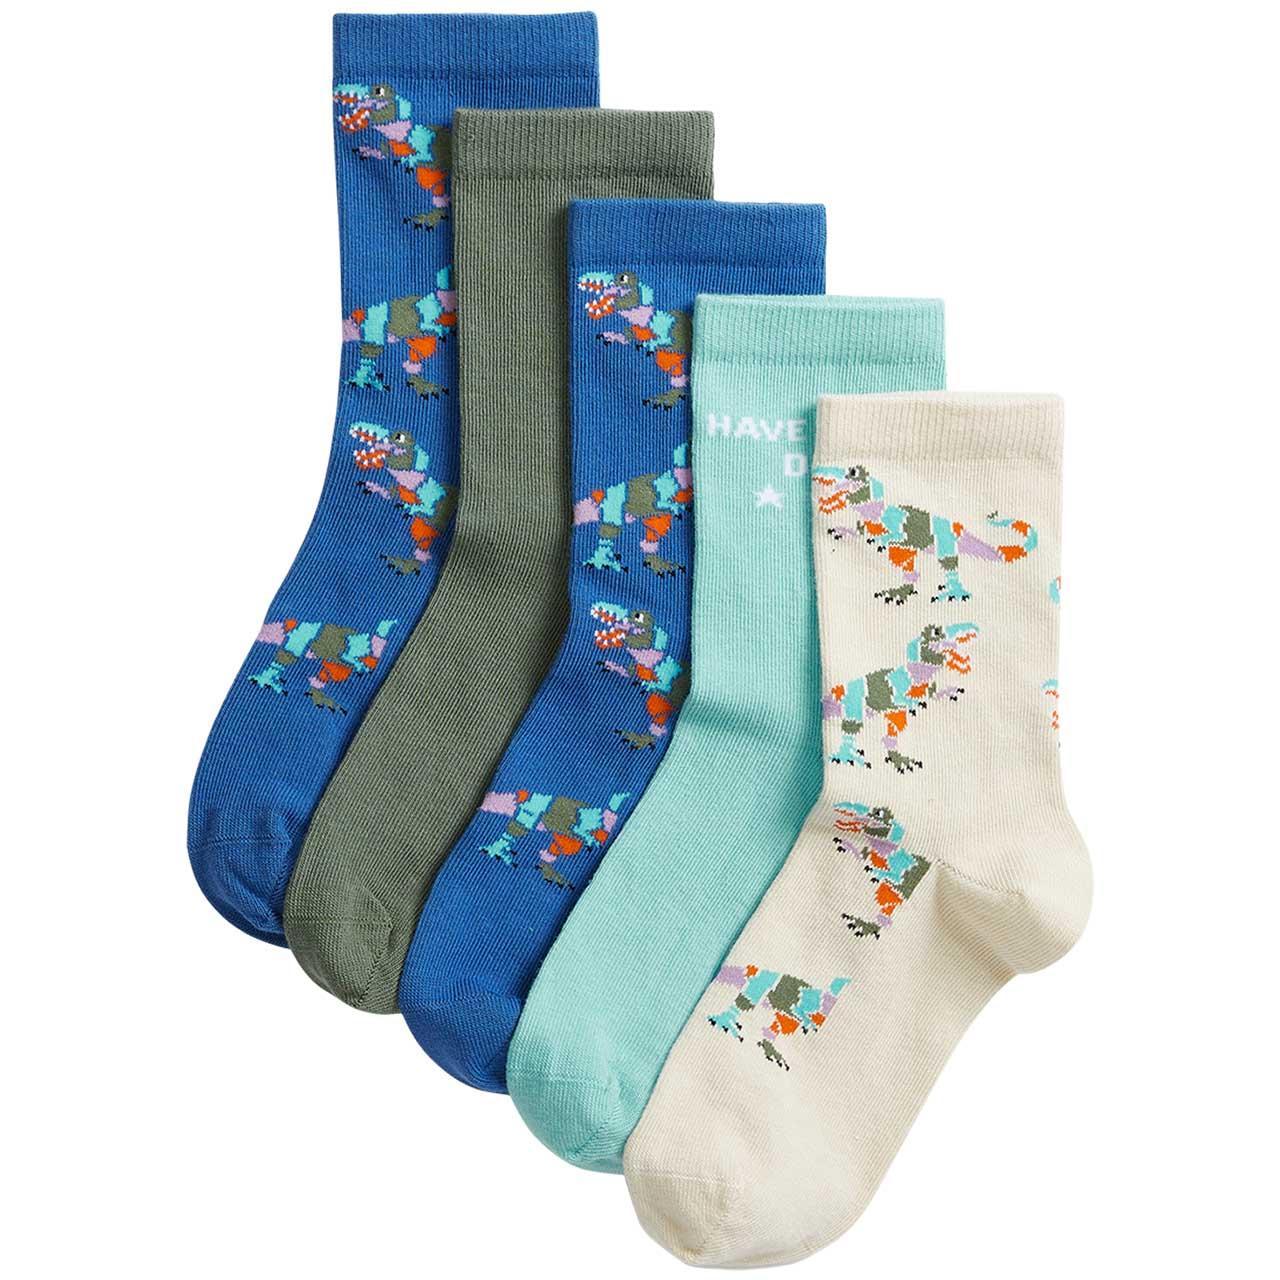 M&S Cotton Dinosaur Socks, 6-8 Small, Multi